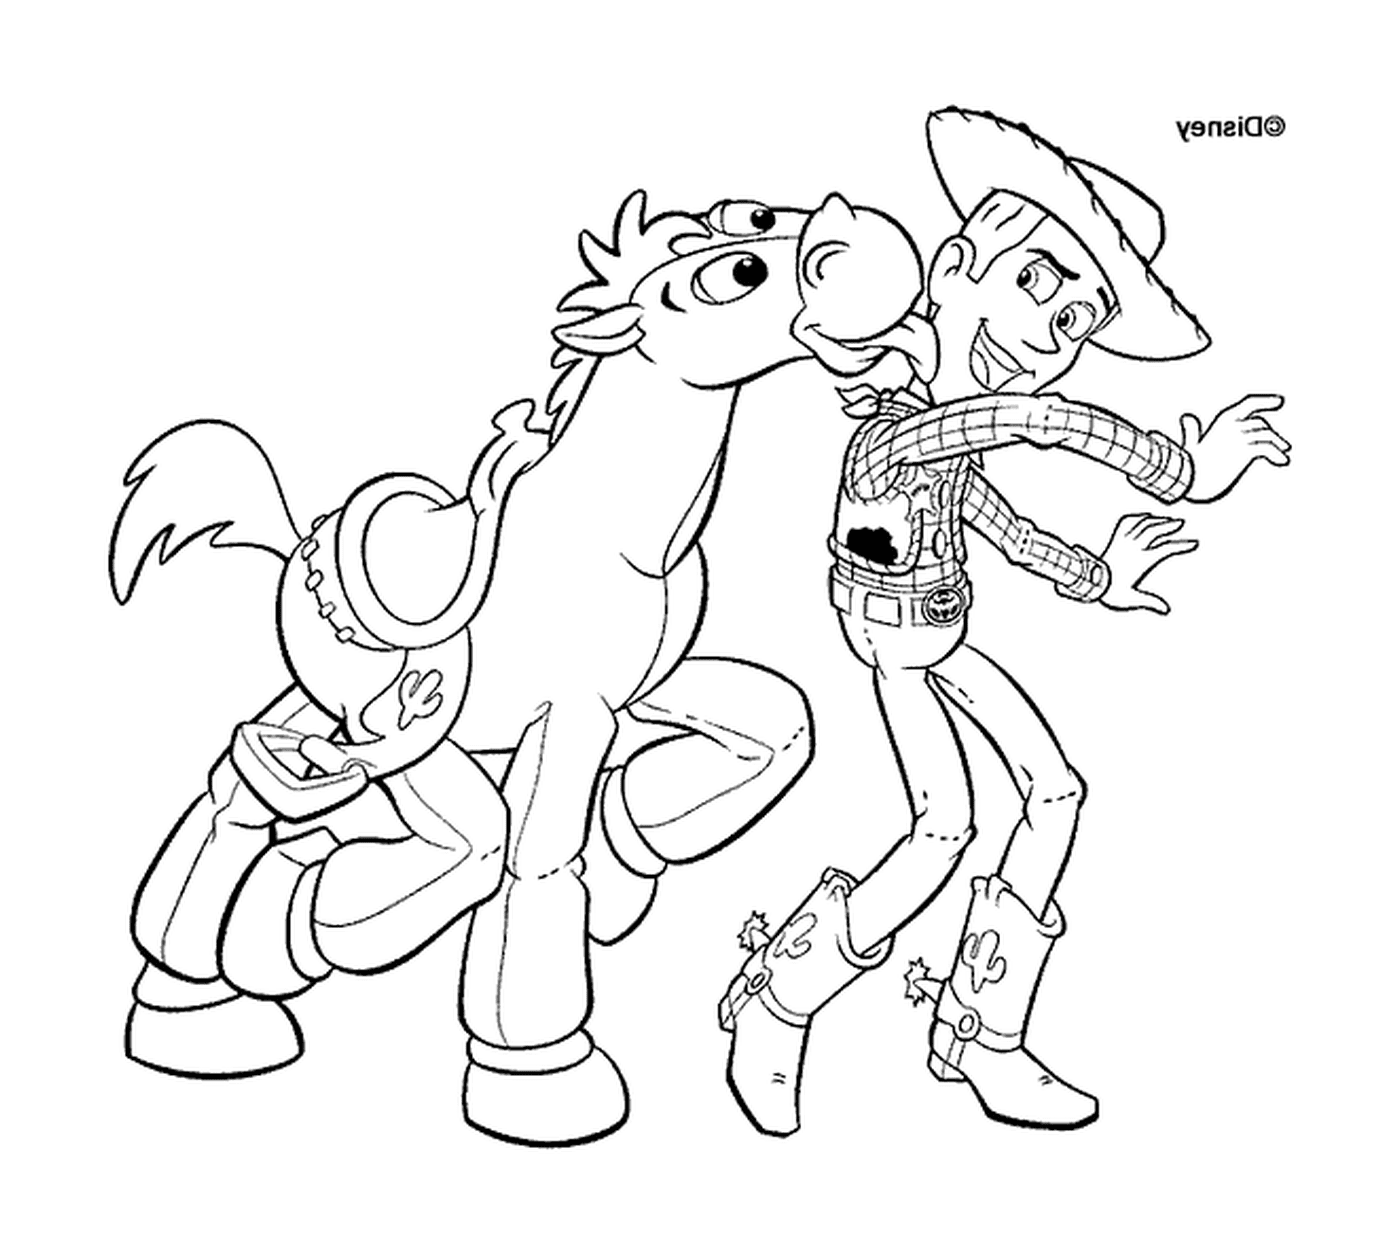  Woody e seu cavalo, duo inseparável 